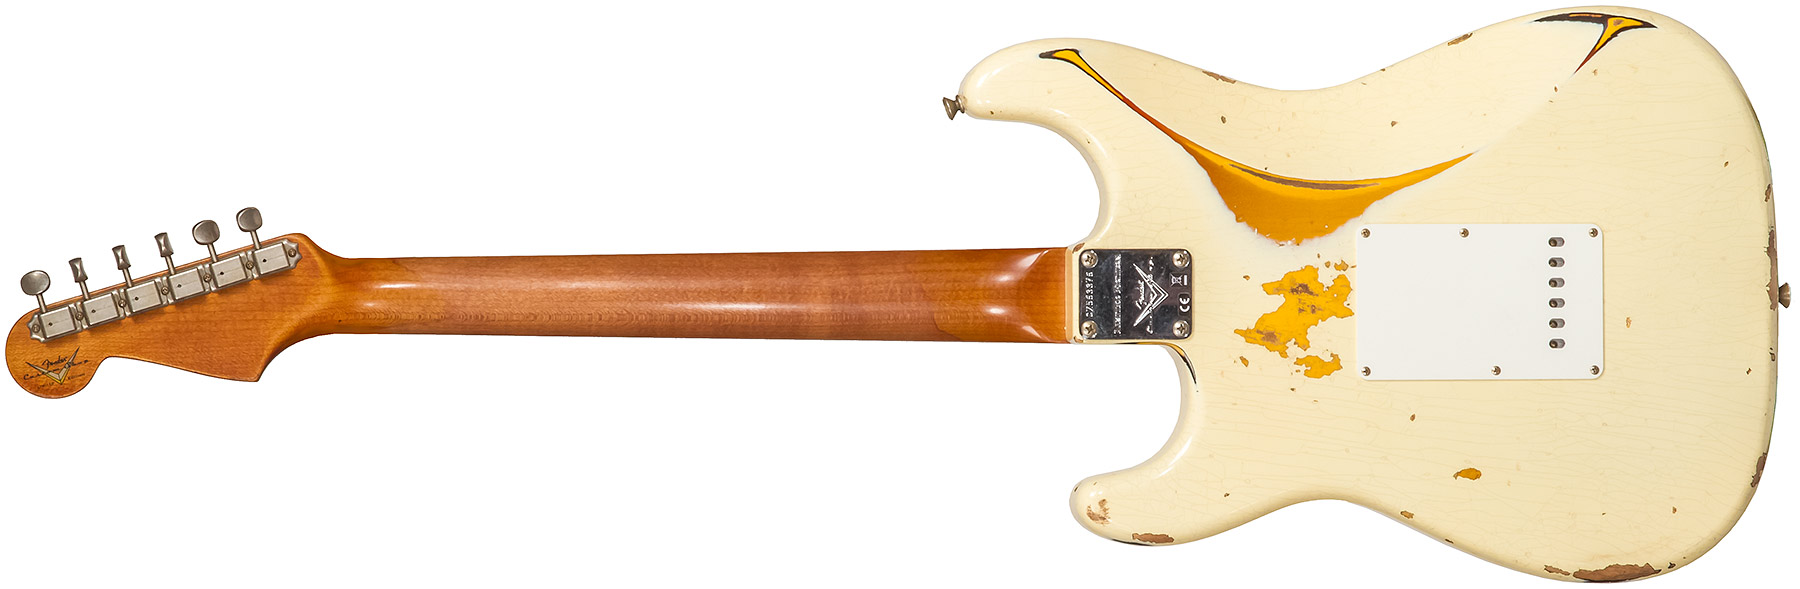 Fender Custom Shop Strat 1961 3s Trem Rw #cz563376 - Heavy Relic Vintage White/3-color Sunburst - Str shape electric guitar - Variation 1